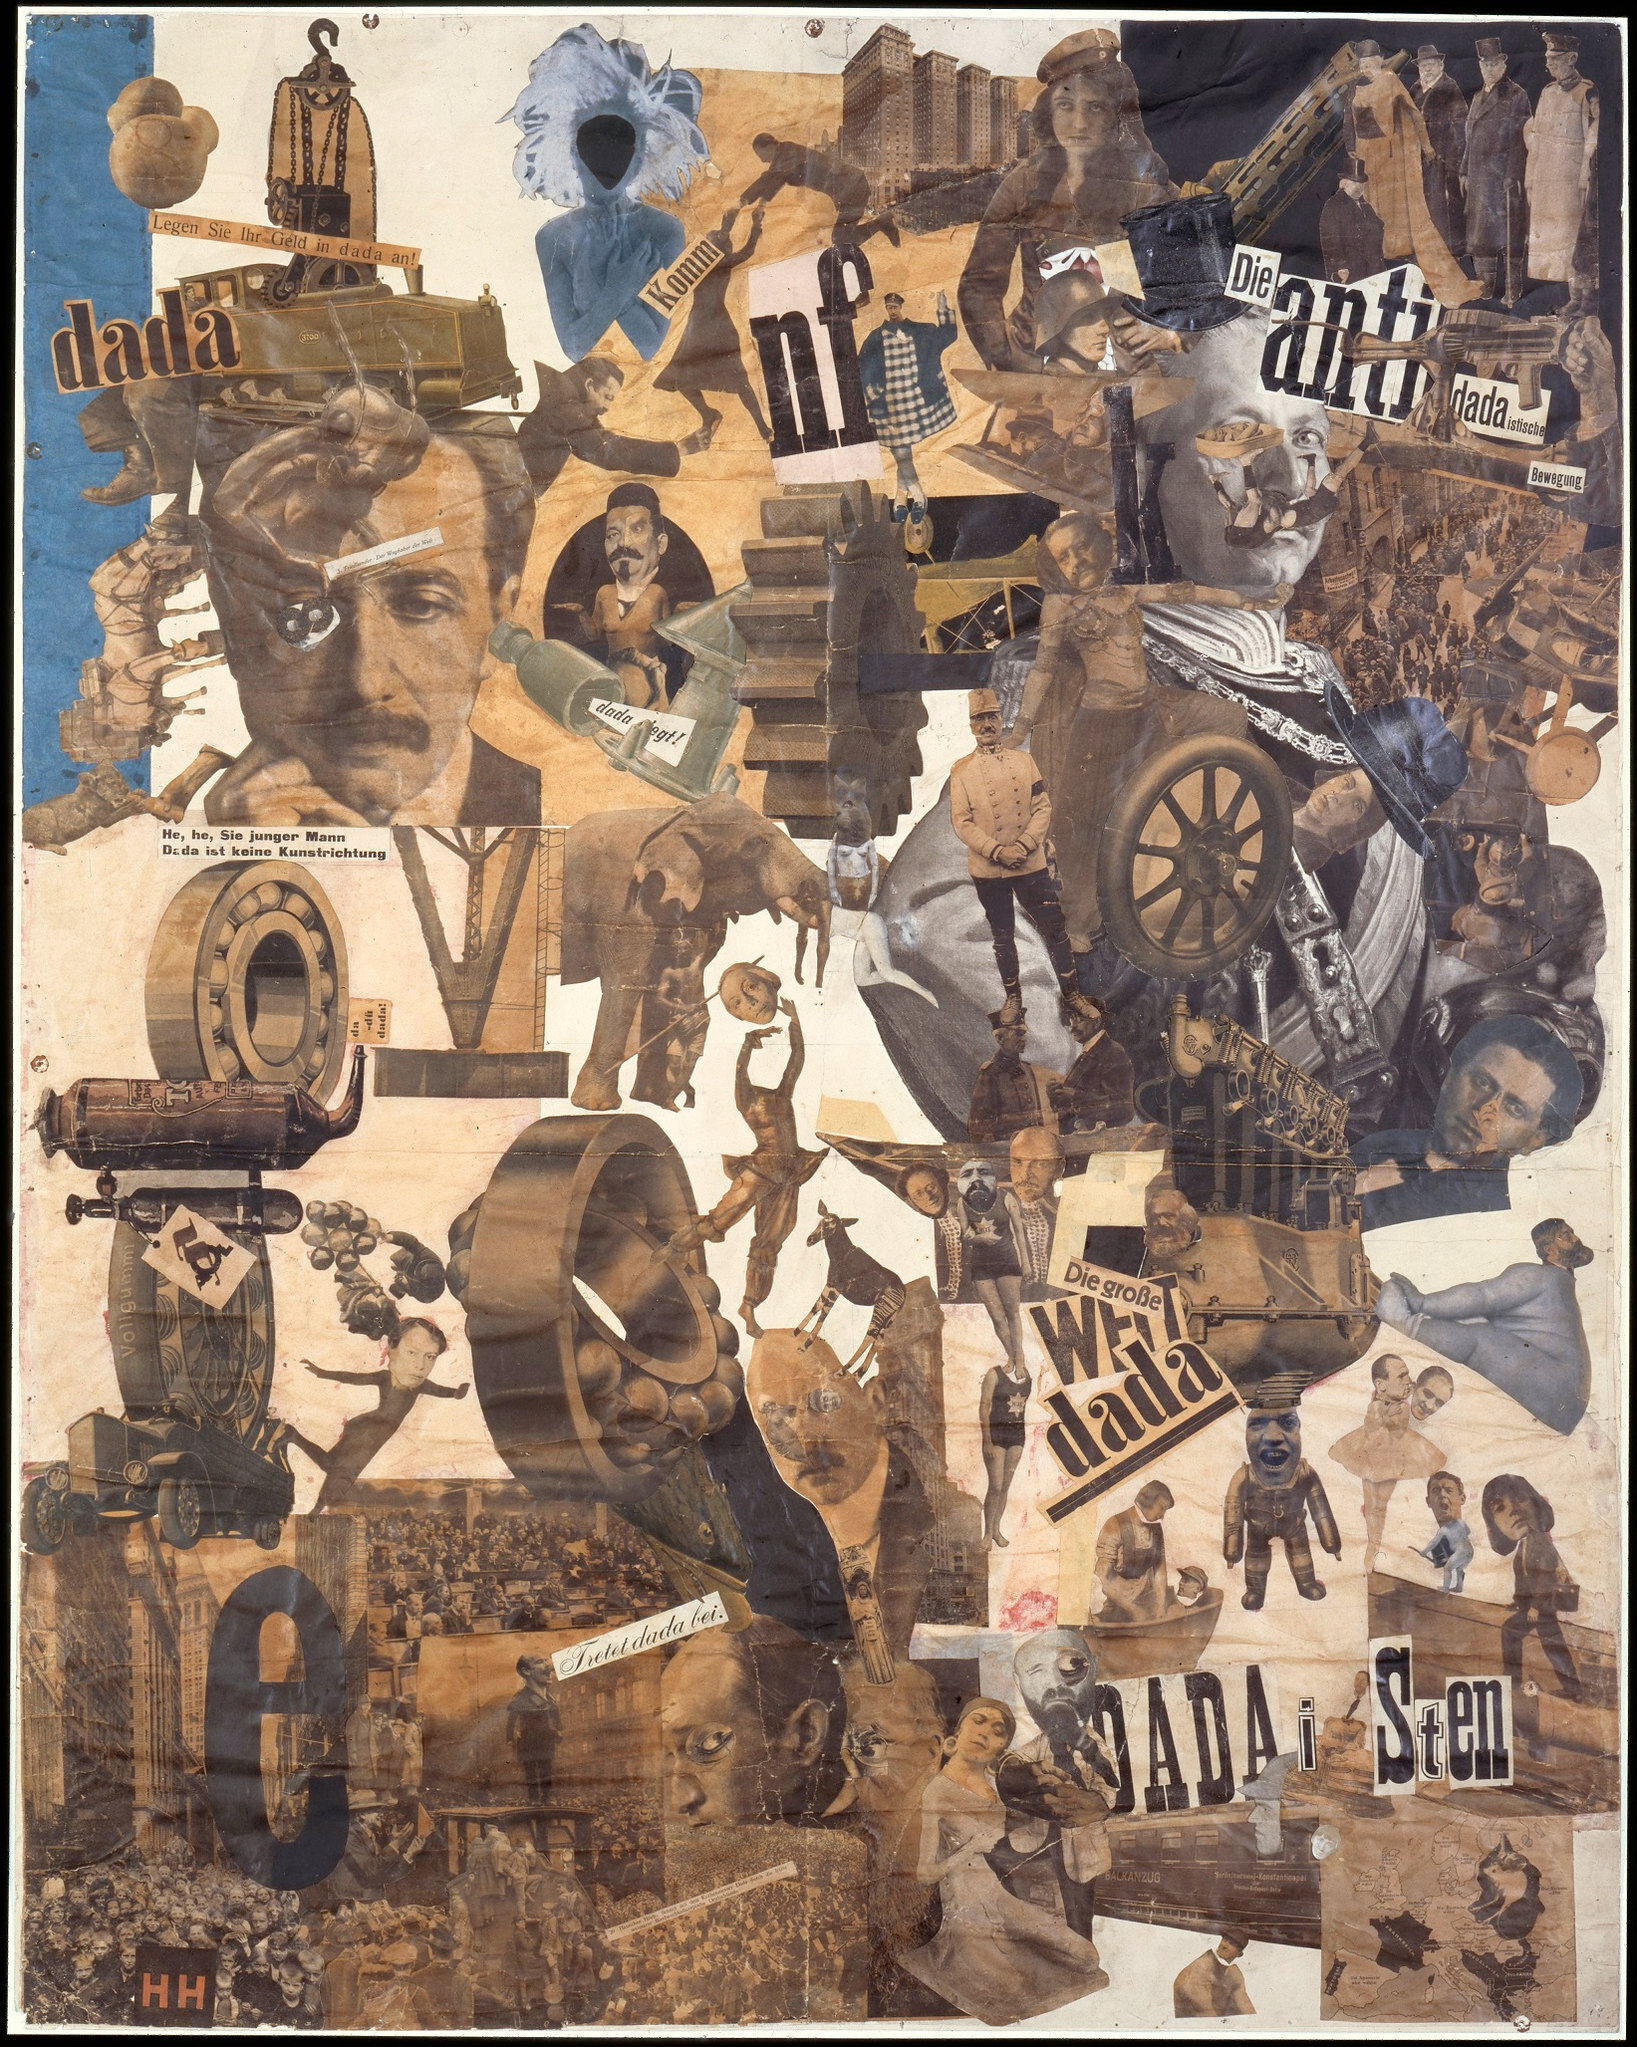 Vintage Avant-Garde Dada Poster 1921 Da-Da New York Dada Group RICHARD BOIX